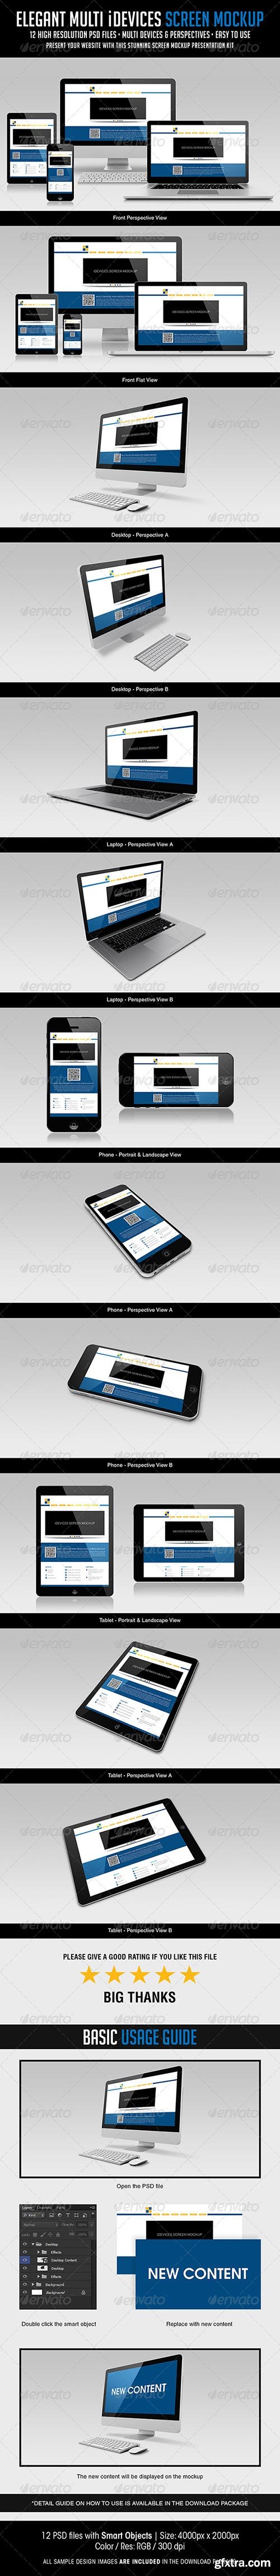 GraphicRiver - Elegant Multi iDevices Screen Mockup